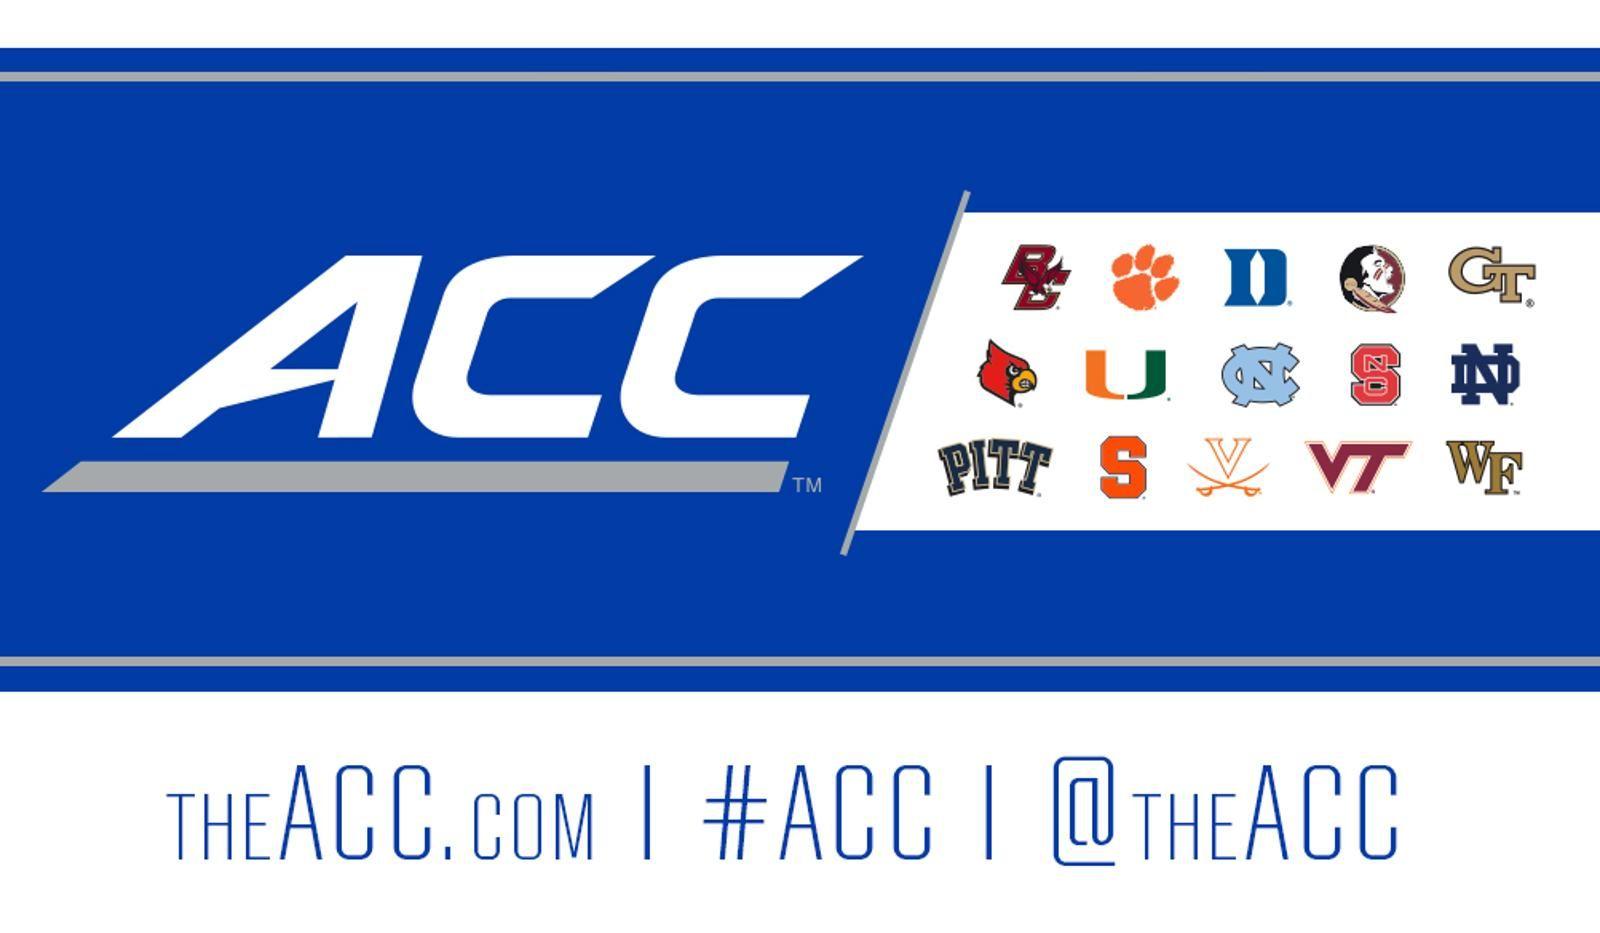 ACC Logo - Ninja Swofford's new ACC logo font looks awfully. familiar